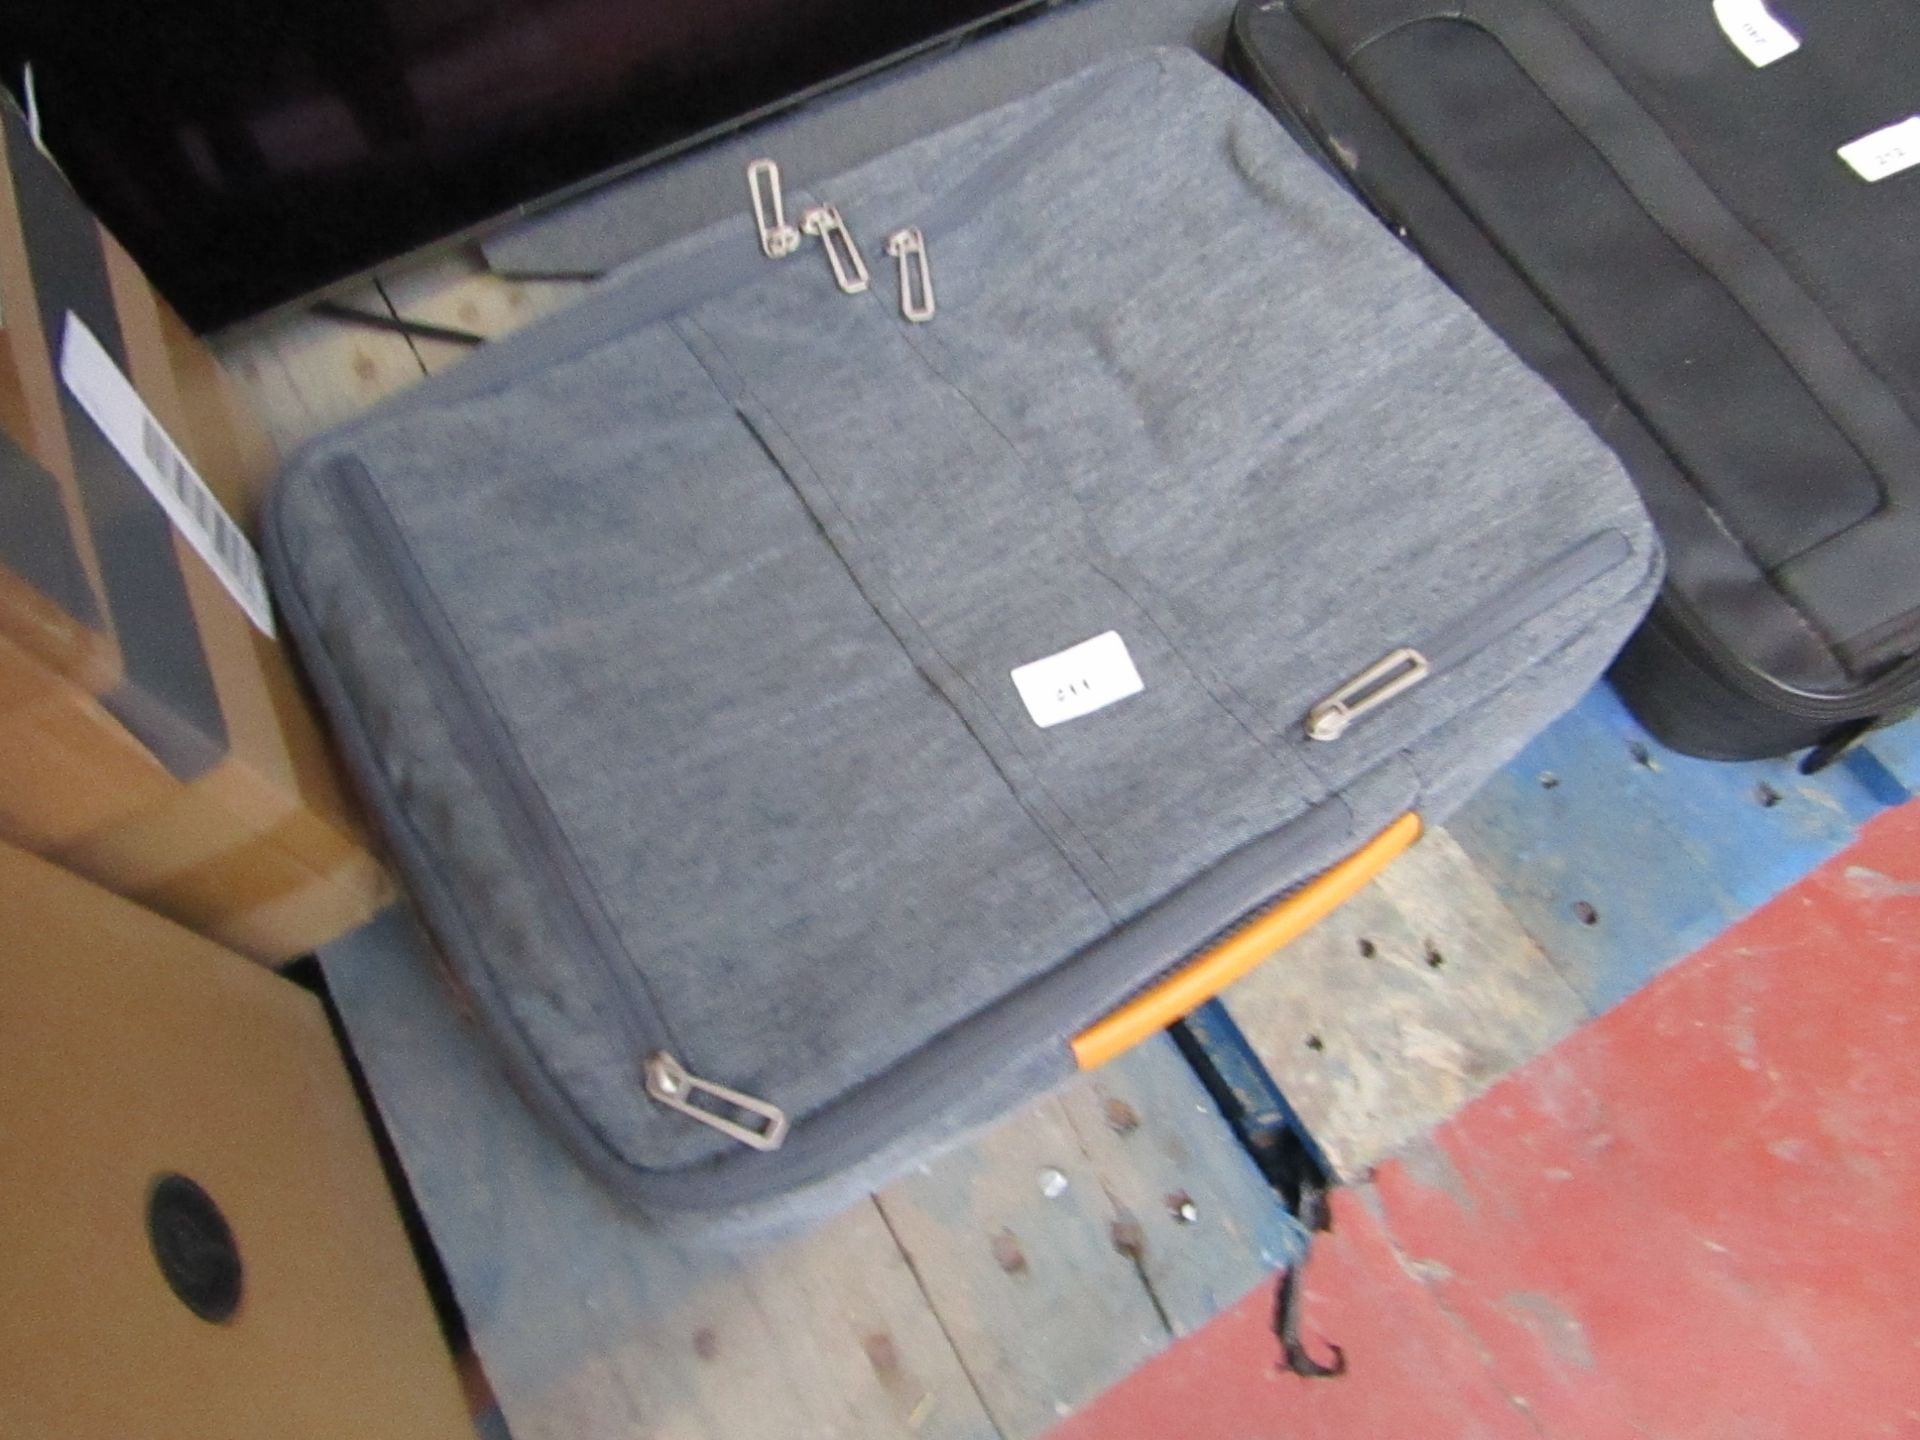 WIWU - Laptop bag - See image for design.